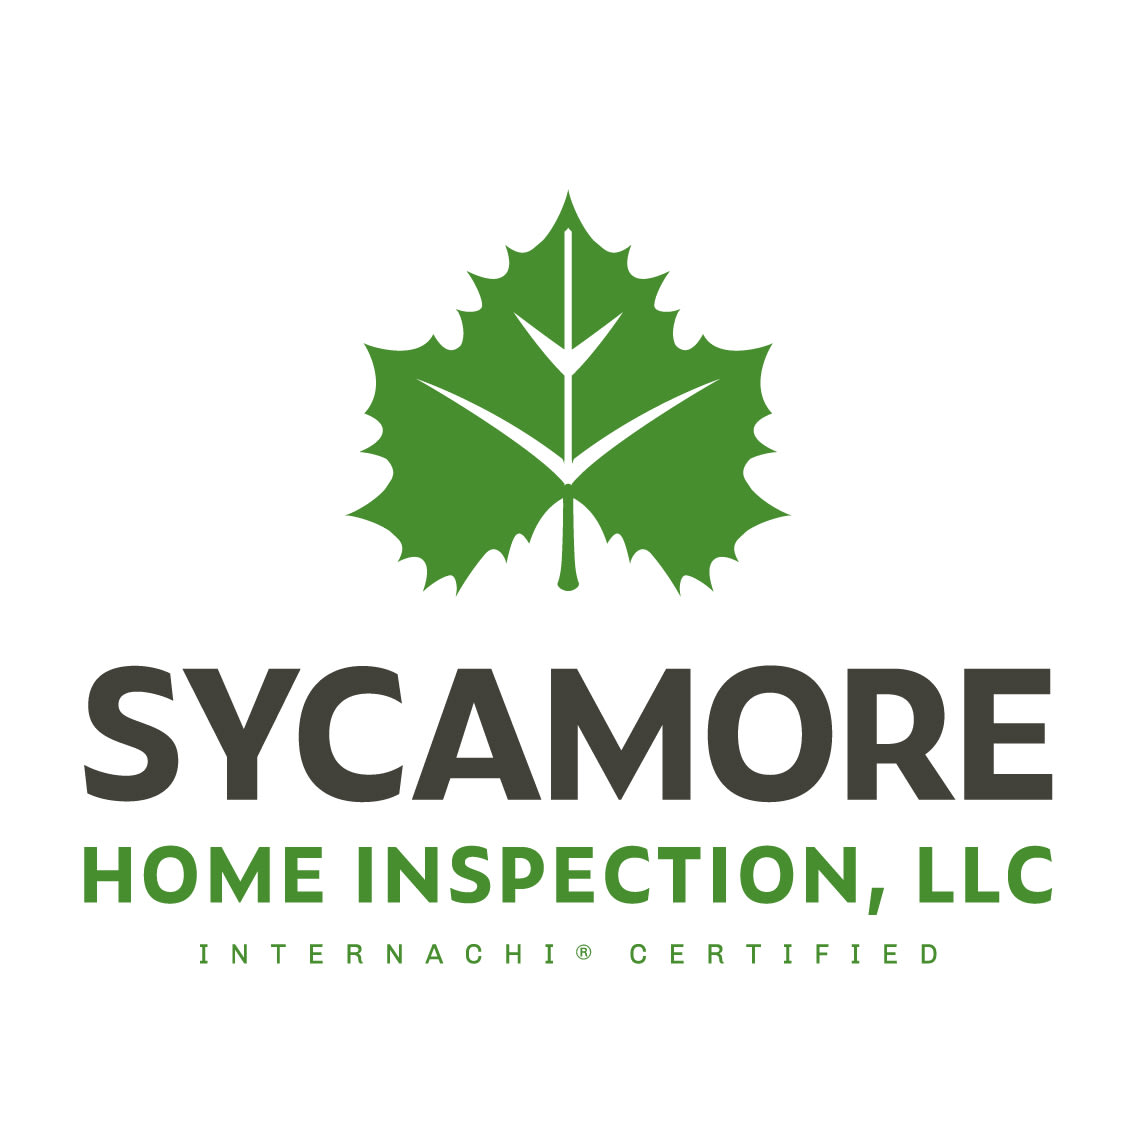 Thomas Woomer - Marietta, OH Certified Home Inspector - InterNACHI®